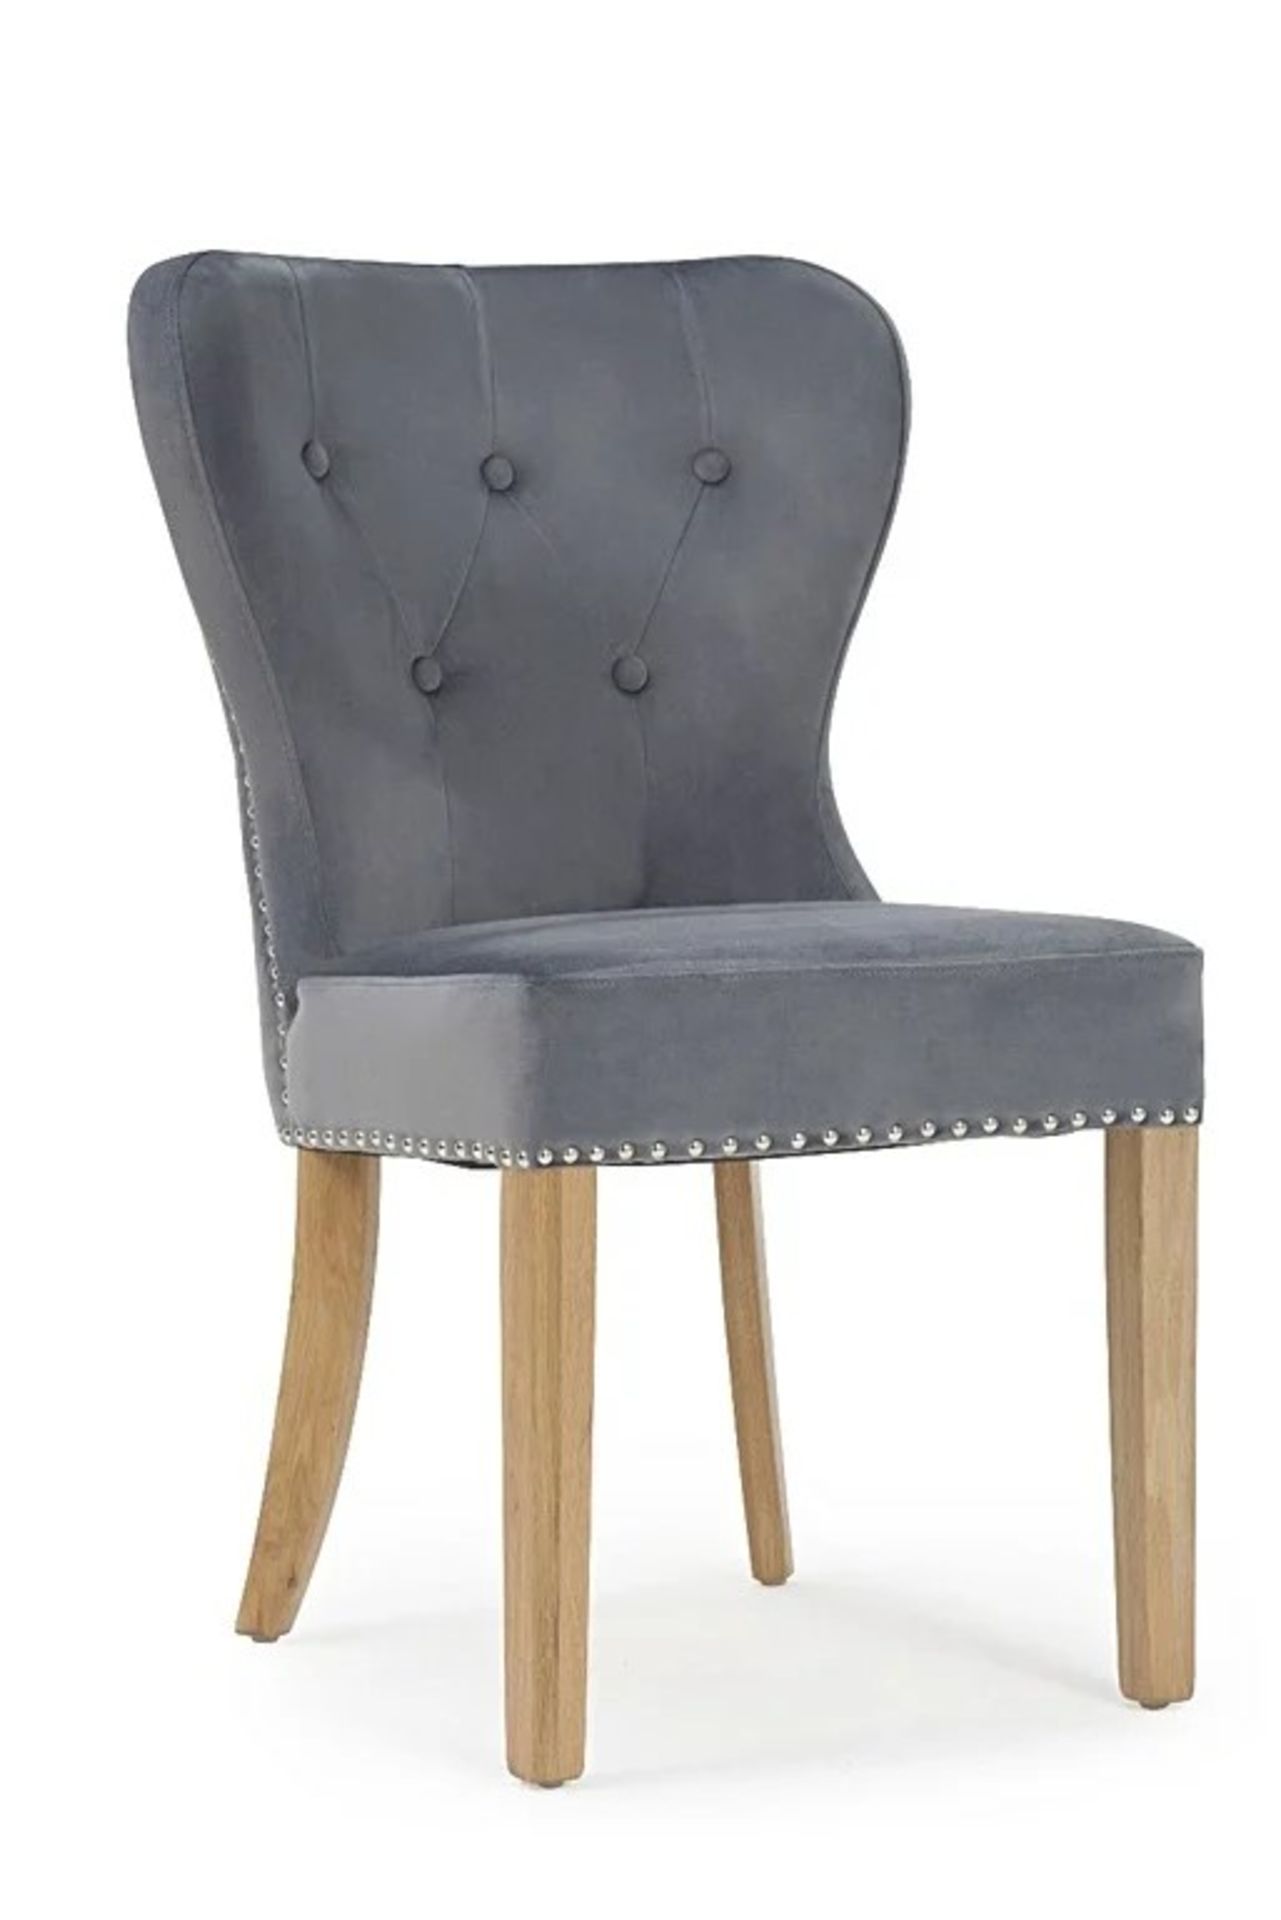 A set of 2 x Knightsbridge Studded Grey Velvet Dining Chair stunning Knightsbridge collection is